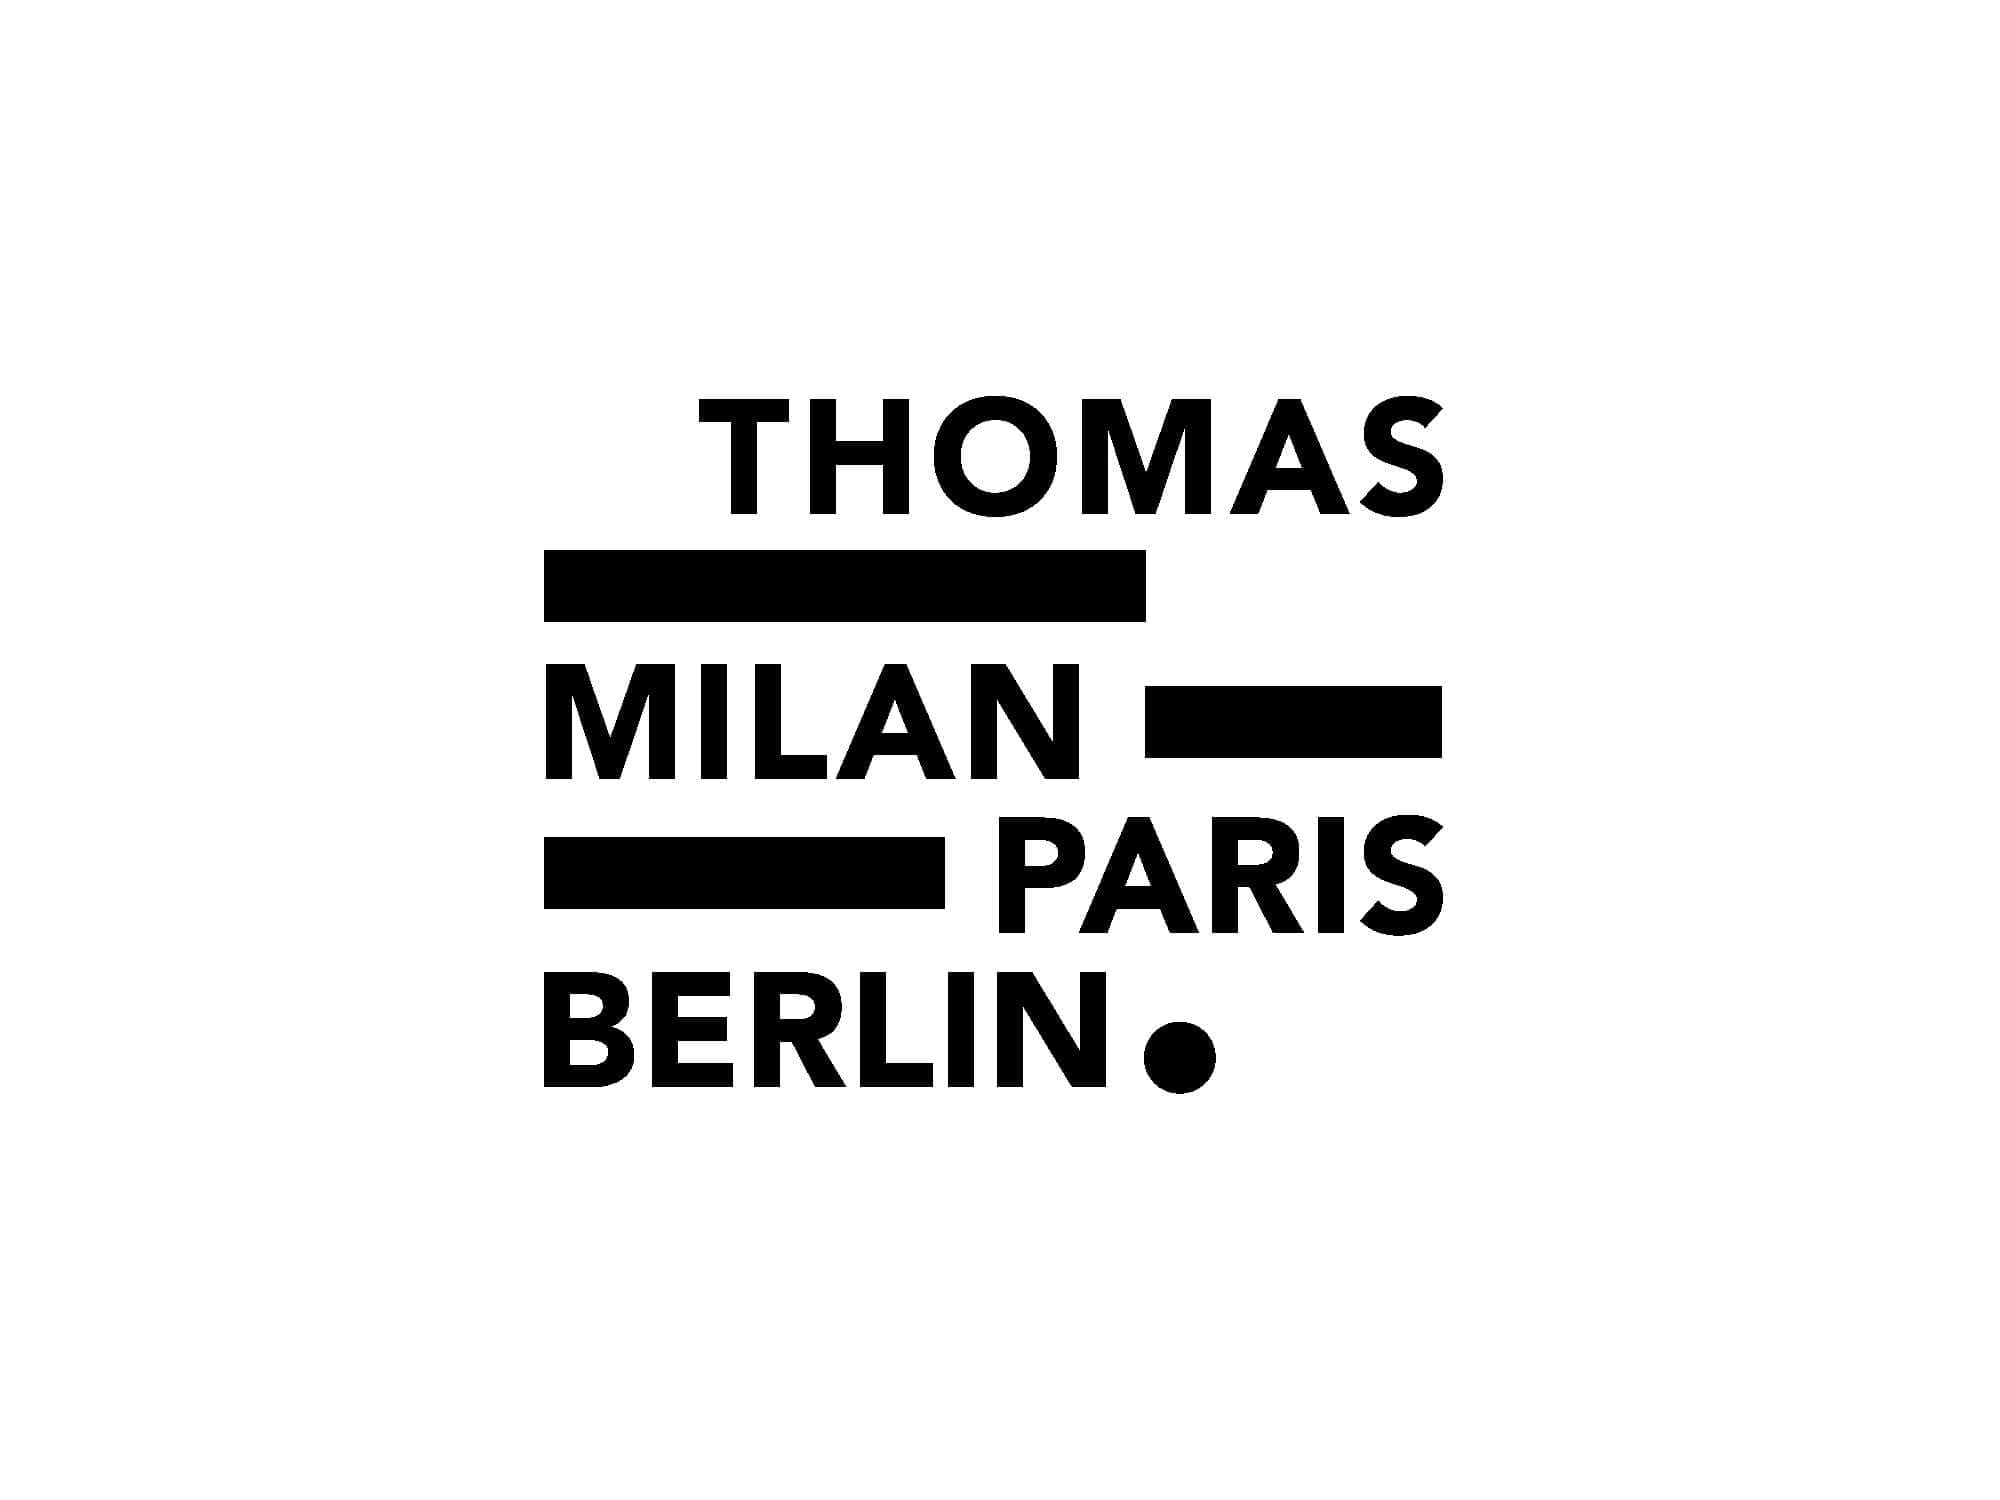 Thomas milan paris berlin extension du logotype de Thomas the startup lawyers. du Ichetkar inspiration Bauhaus